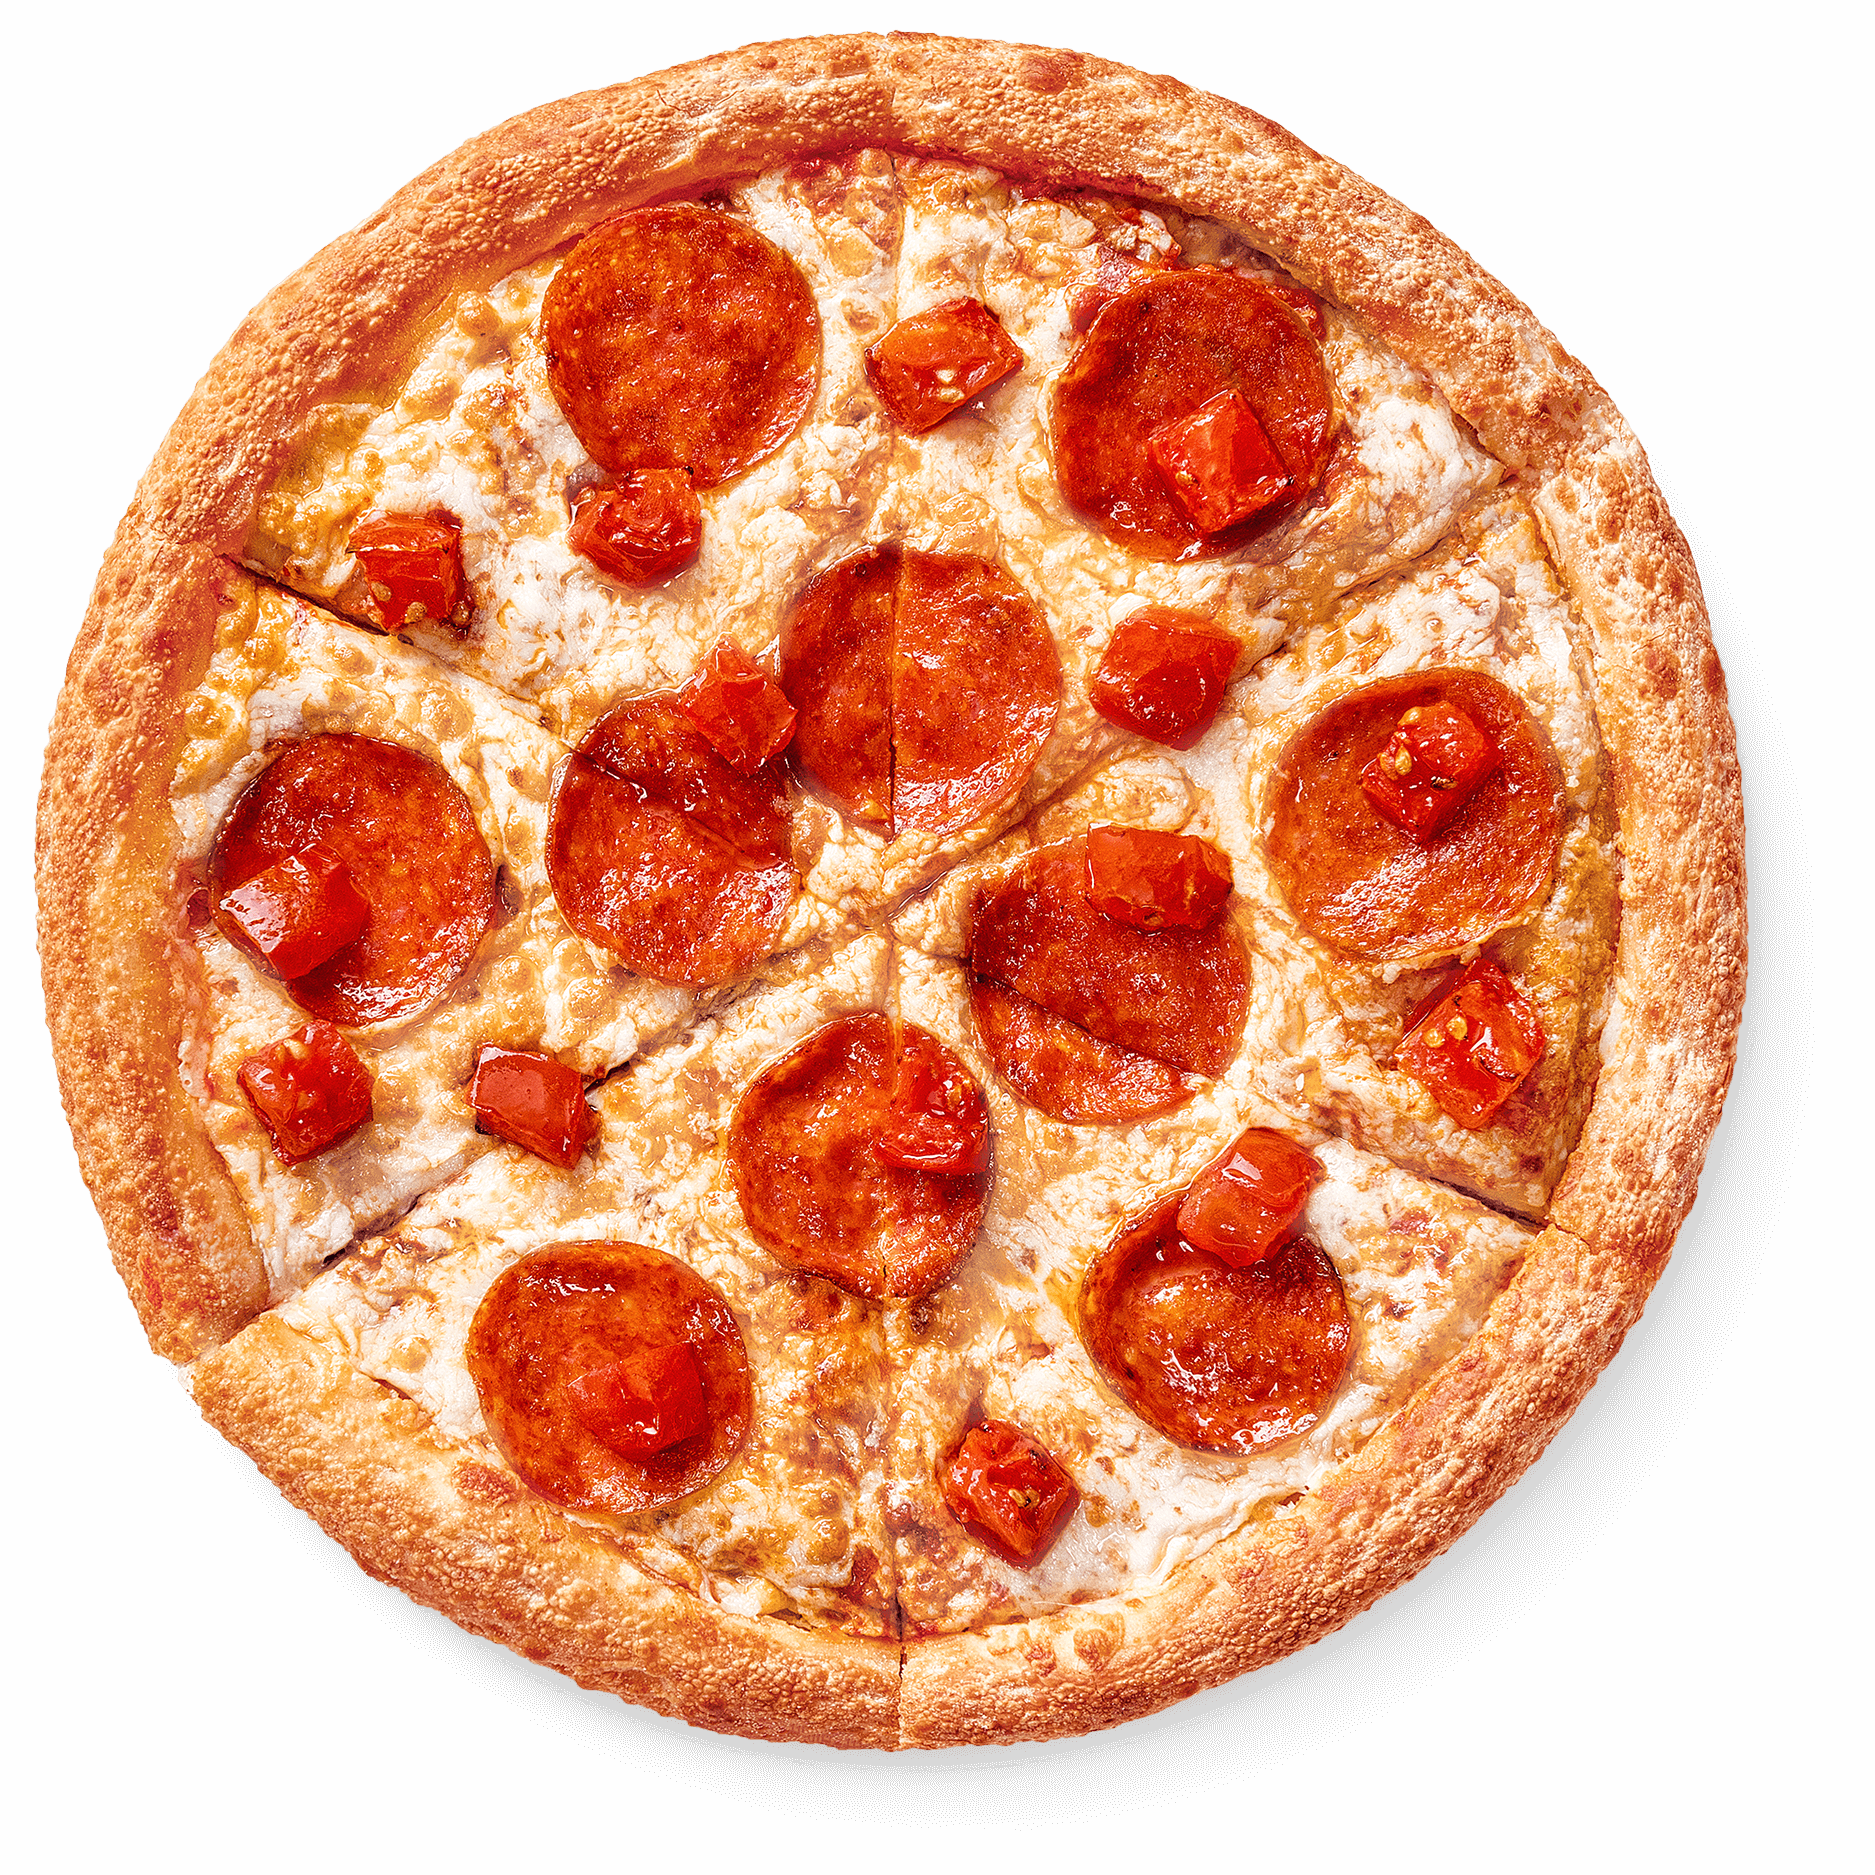 сколько стоит пепперони в додо пицце фото 7